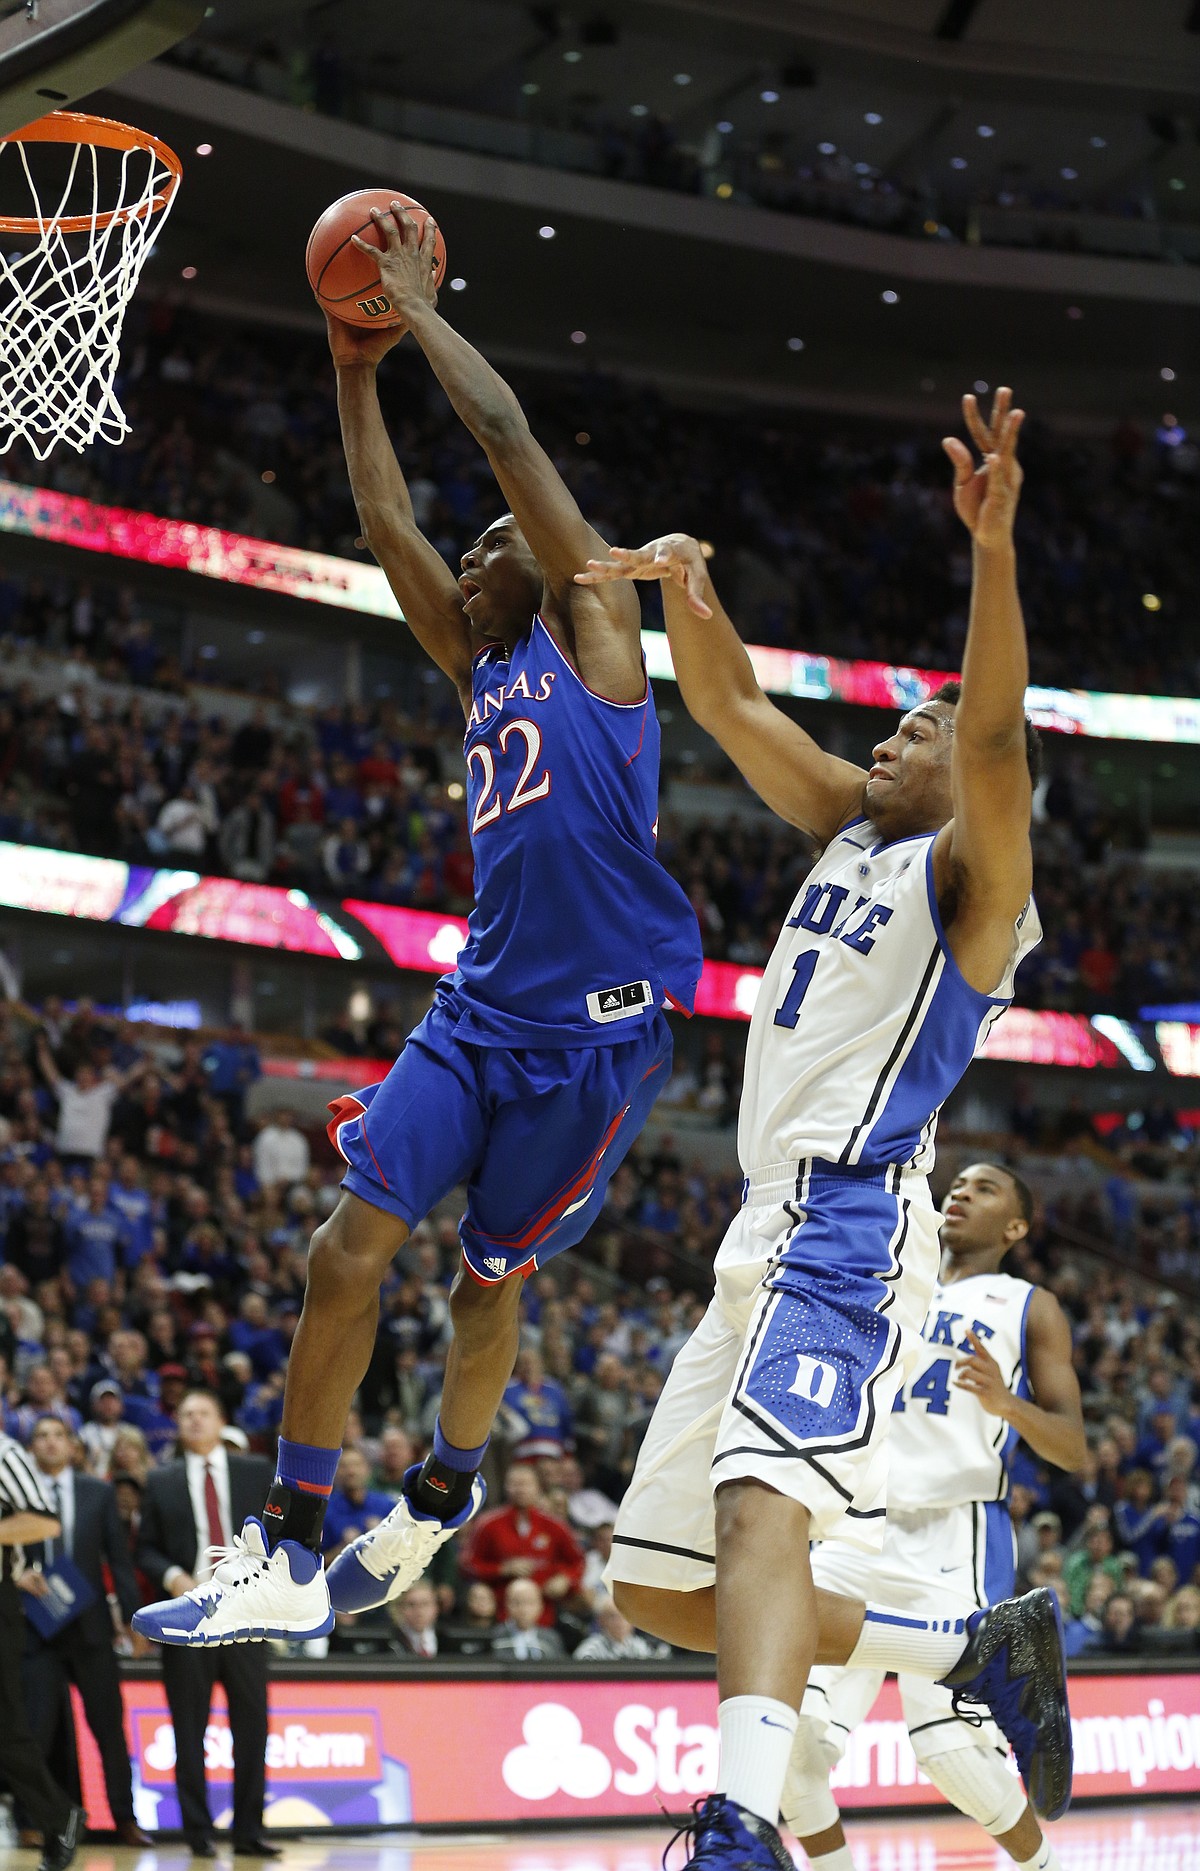 Kansas basketball 2013-14 season in photos | KUsports.com